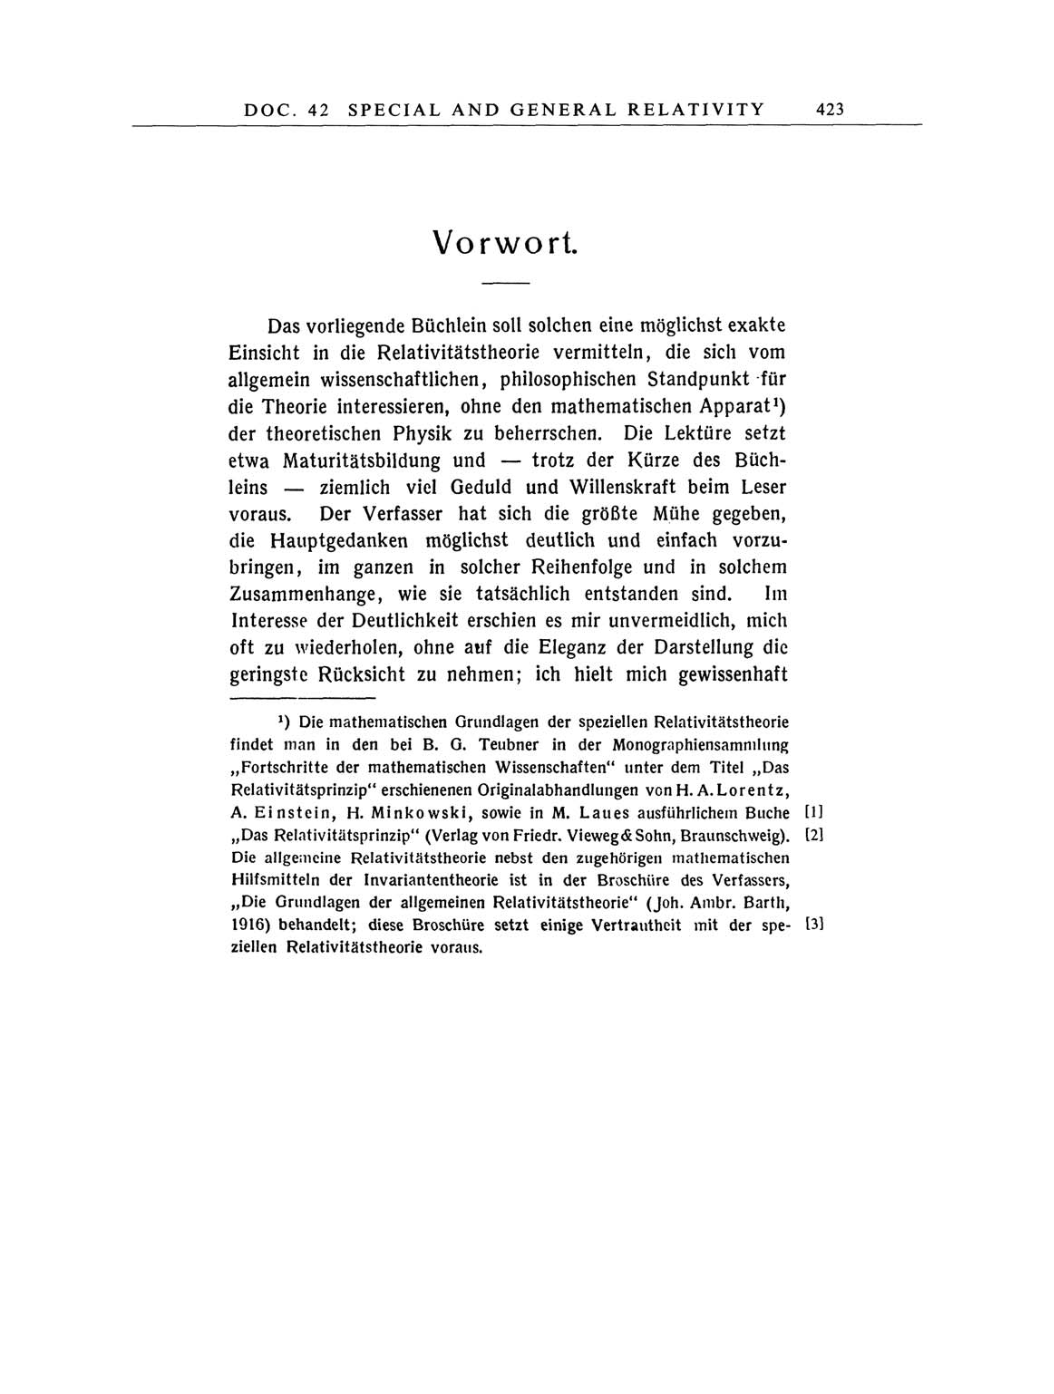 Volume 6: The Berlin Years: Writings, 1914-1917 page 423